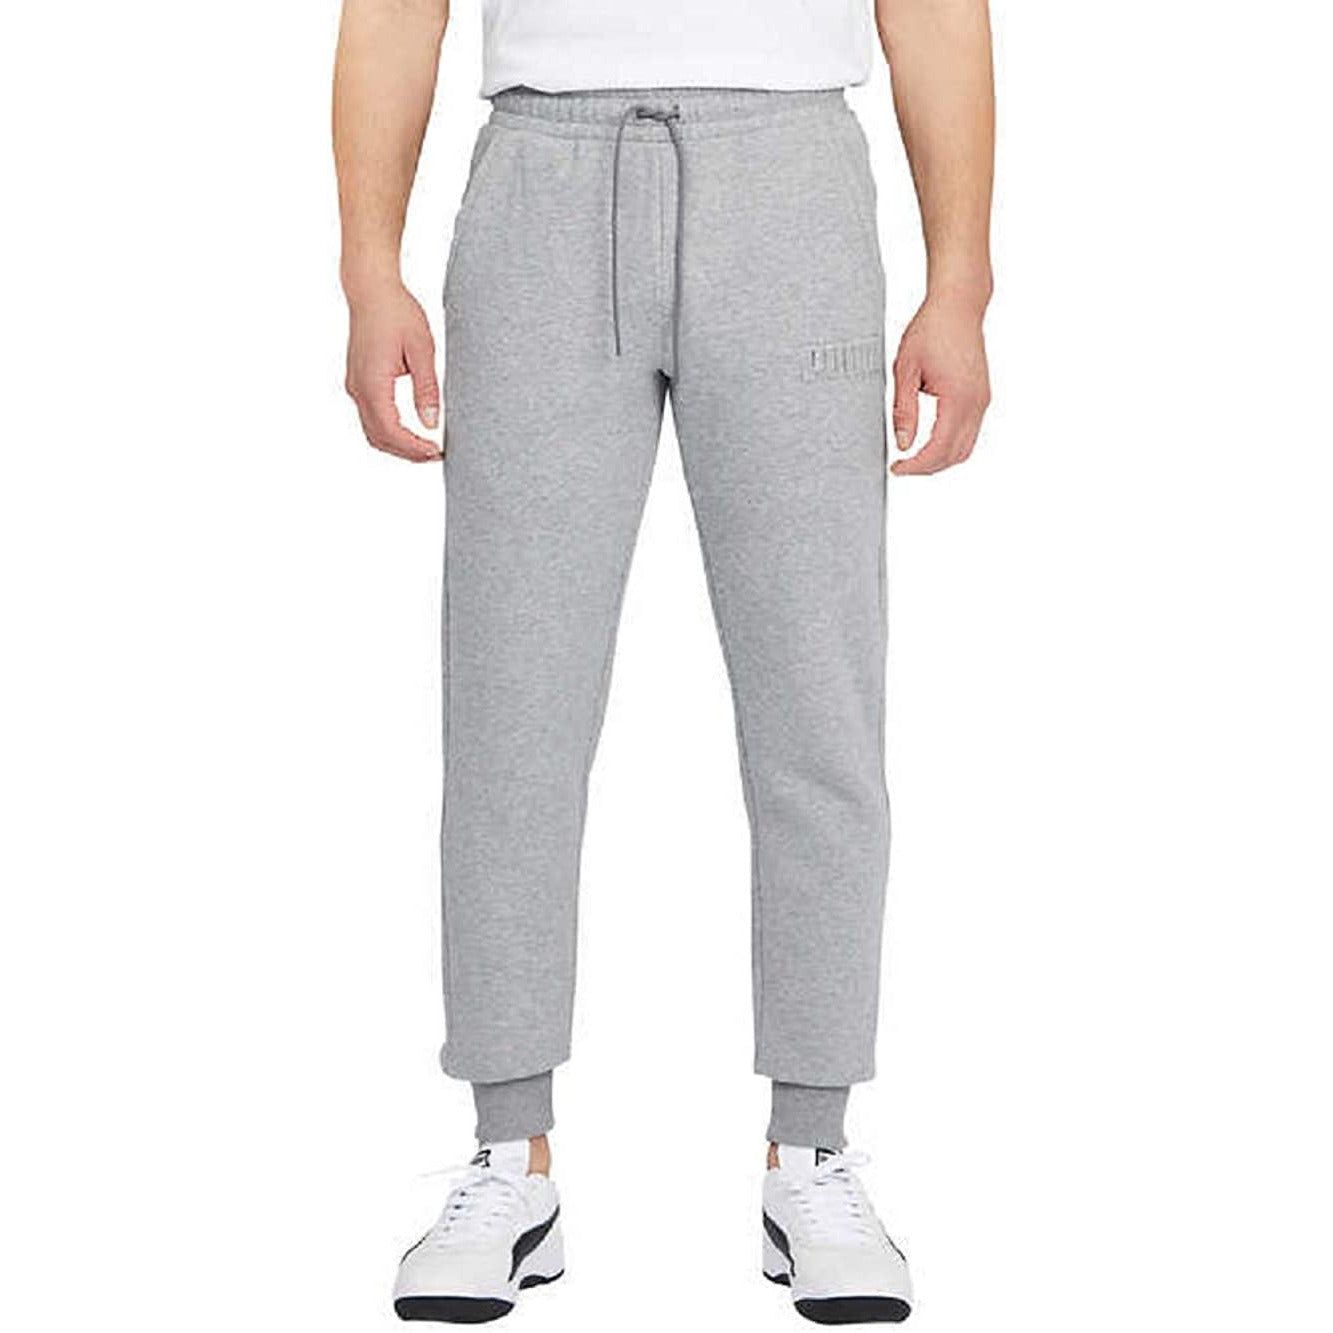 Puma Men's Fleece Jogger Pants: Stylish and Comfortable Activewear for Men